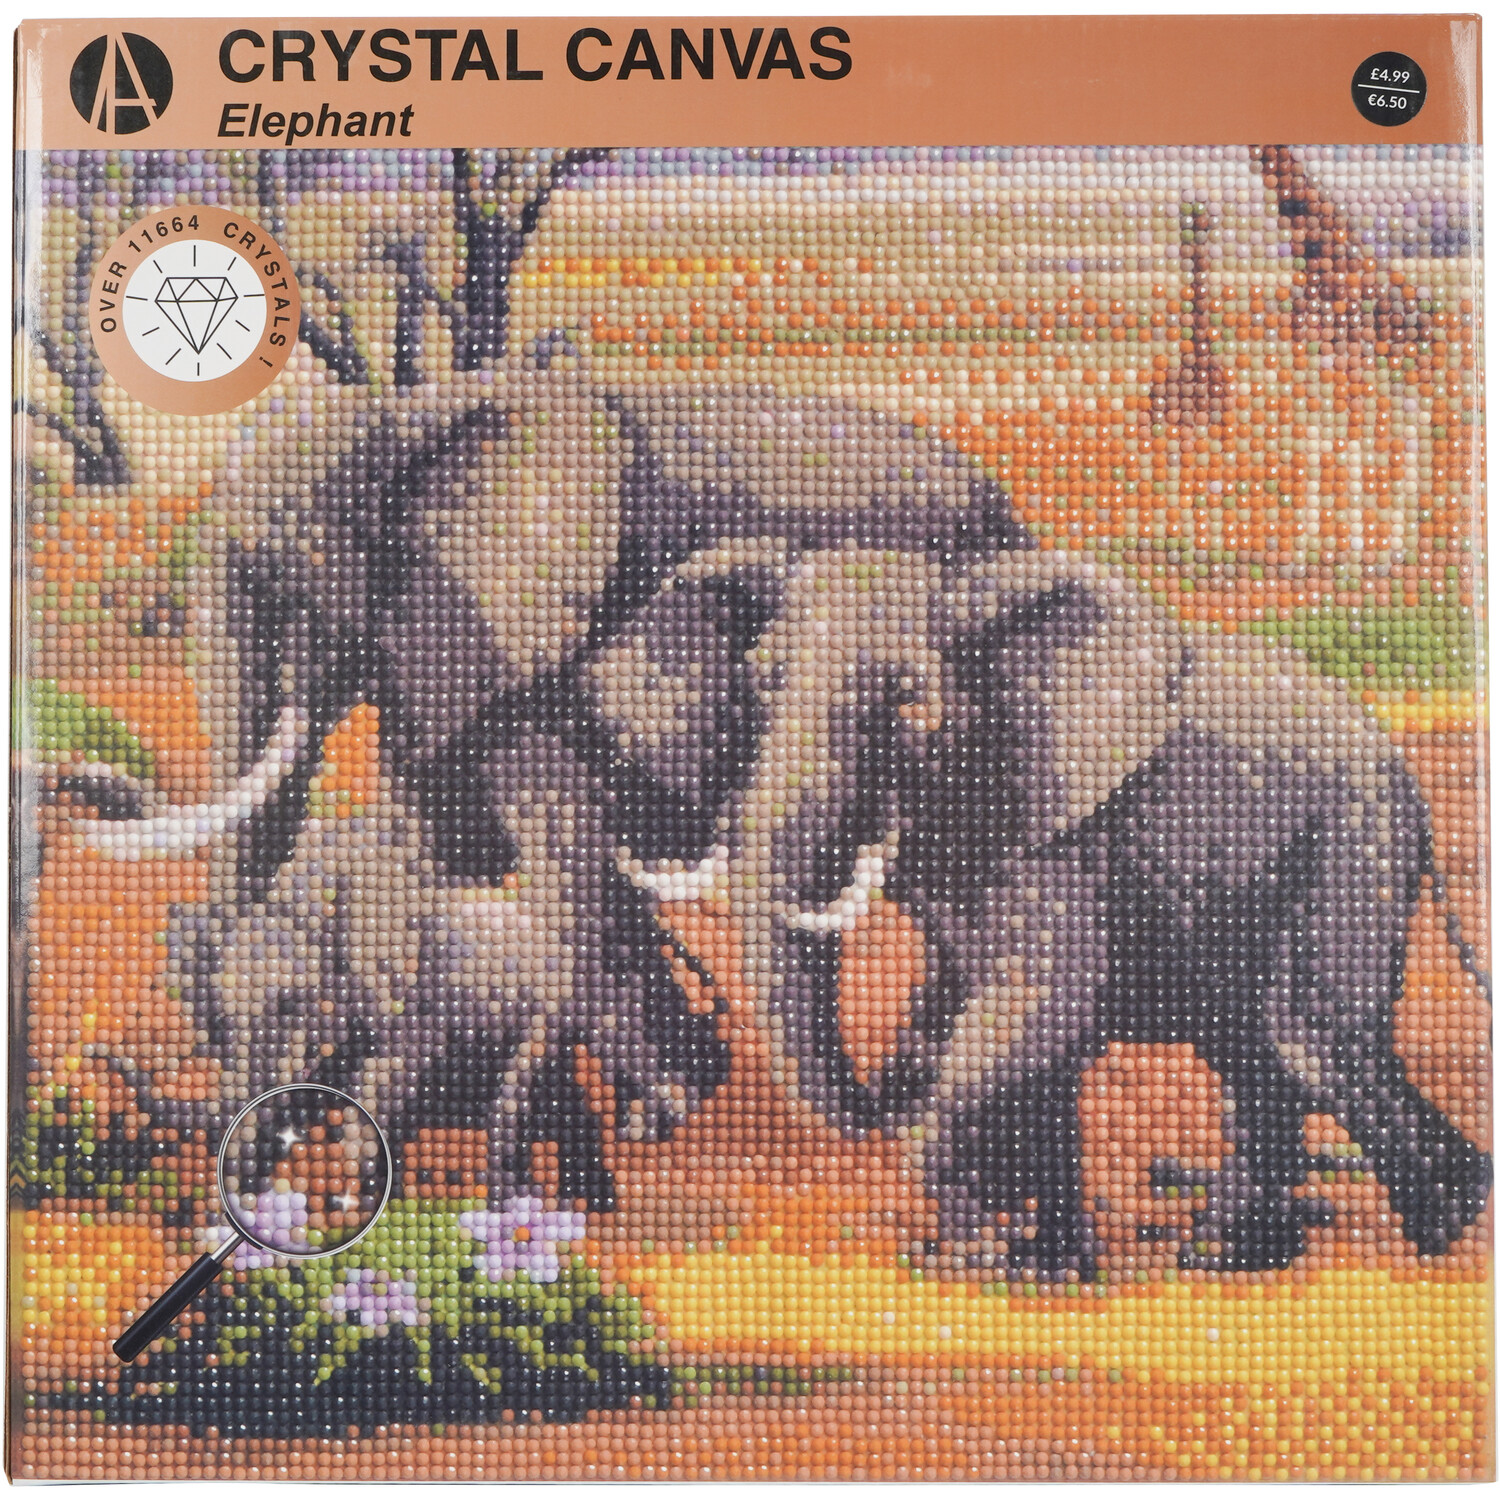 Crystal Canvas Koala or Elephant Image 4